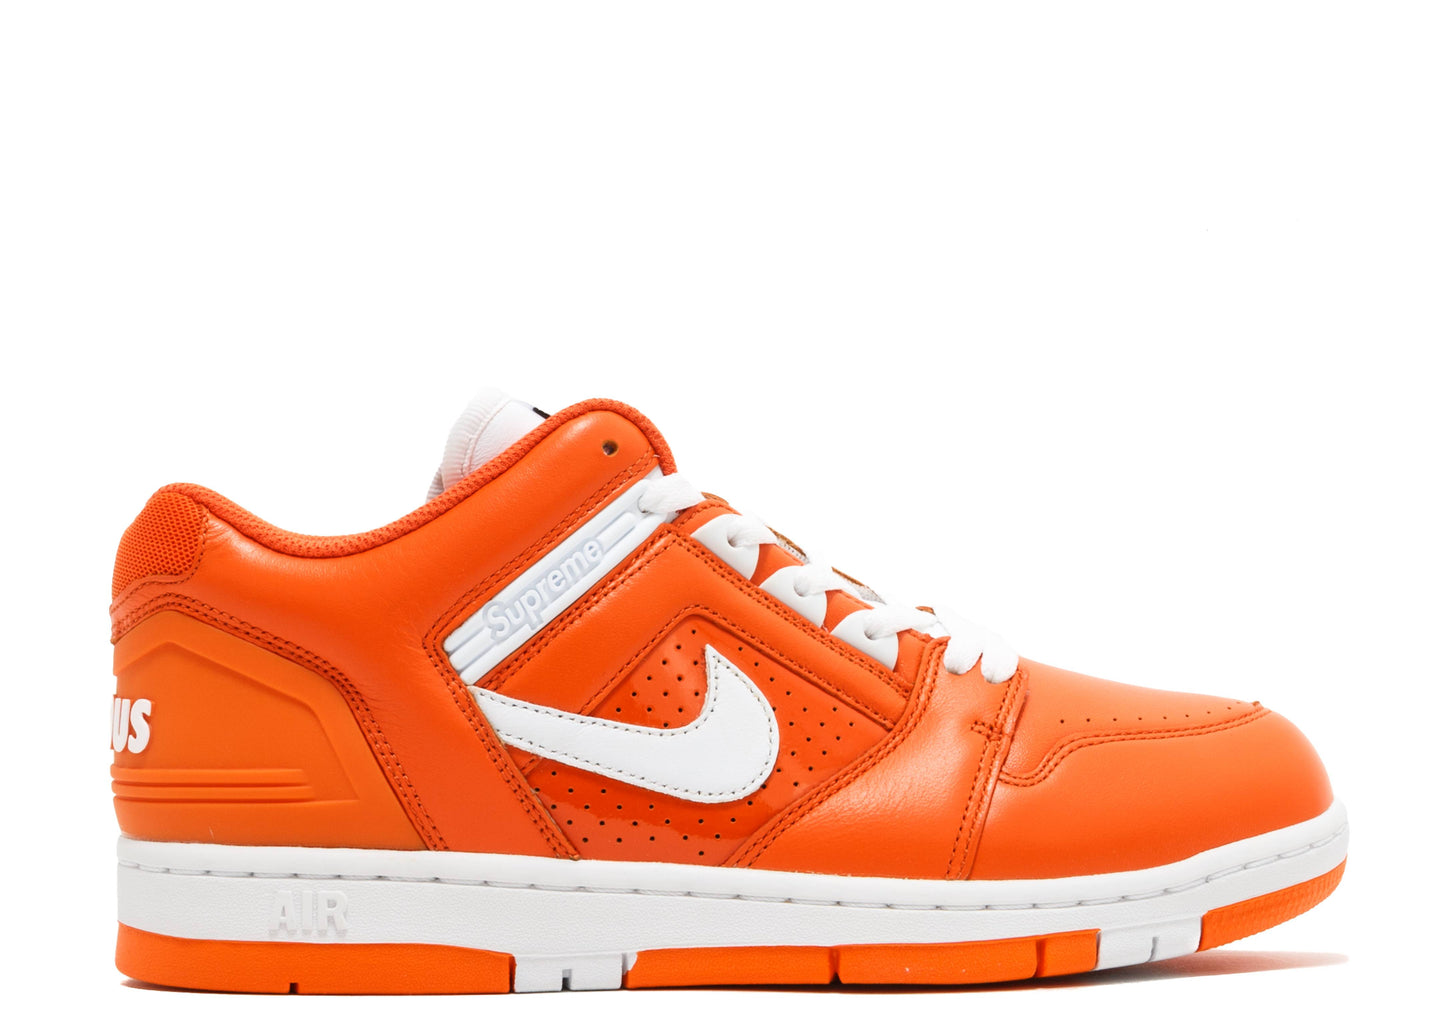 Supreme x Nike SB Air Force 2 Low "Orange"